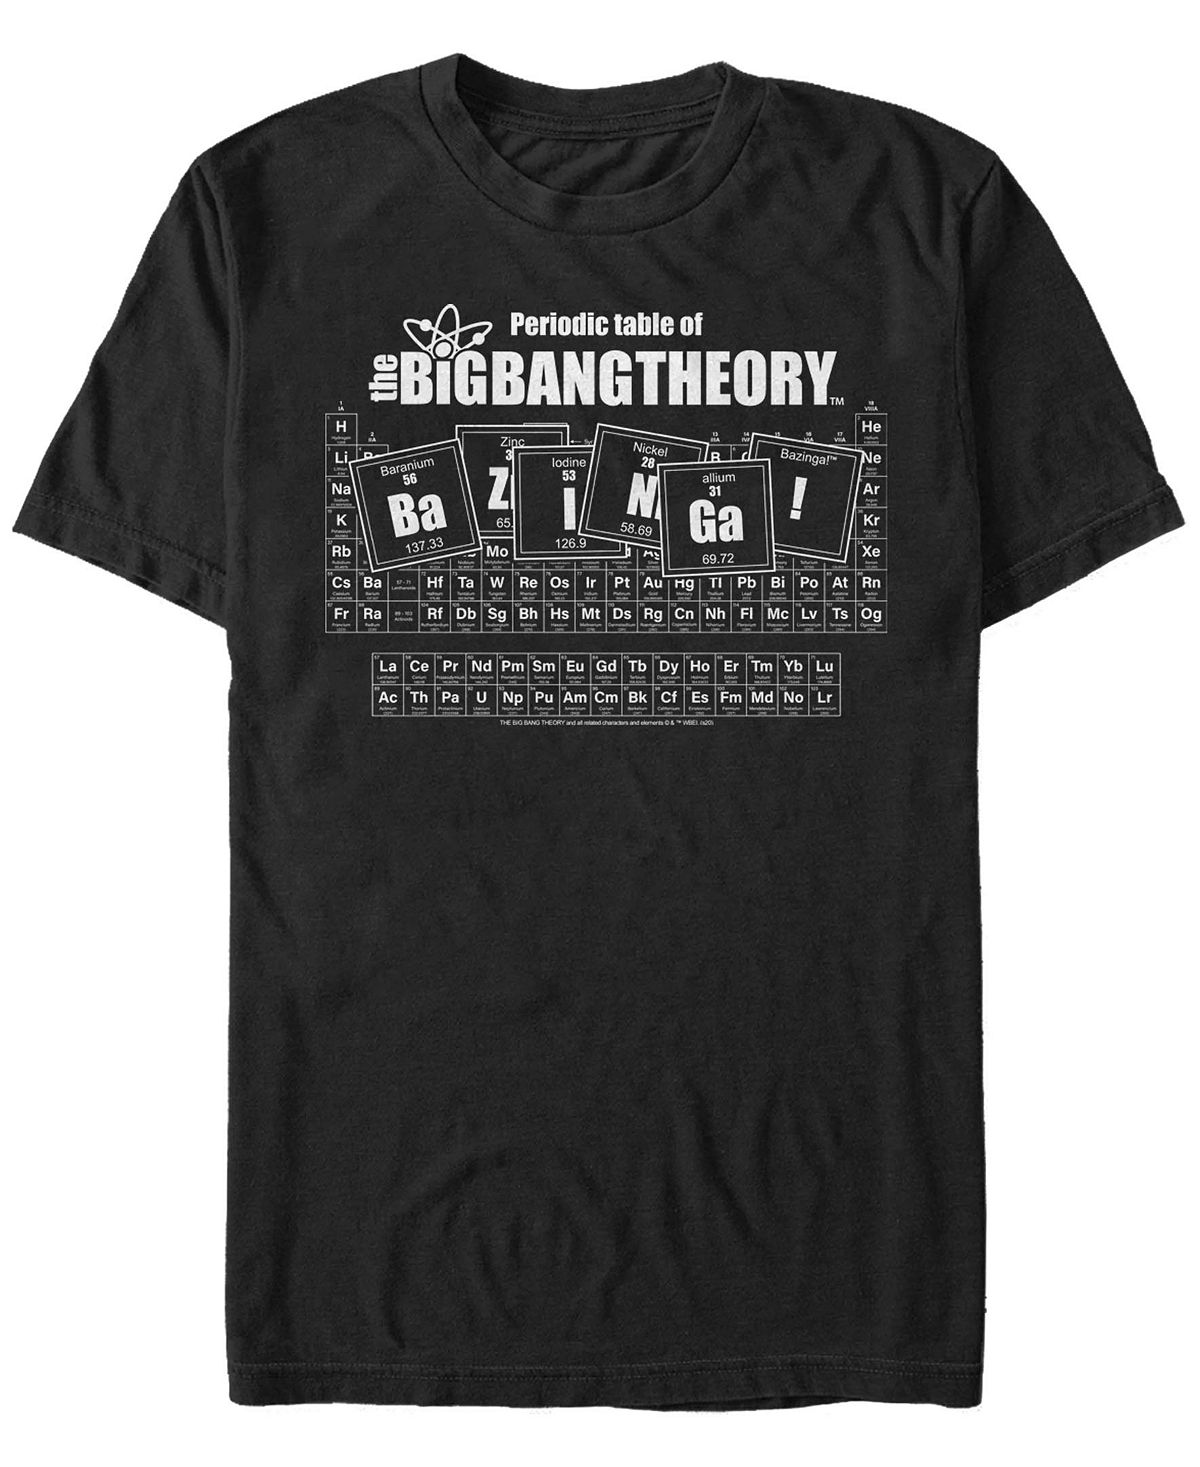 Мужская футболка с коротким рукавом the big bang theory table of bazinga Fifth Sun, черный